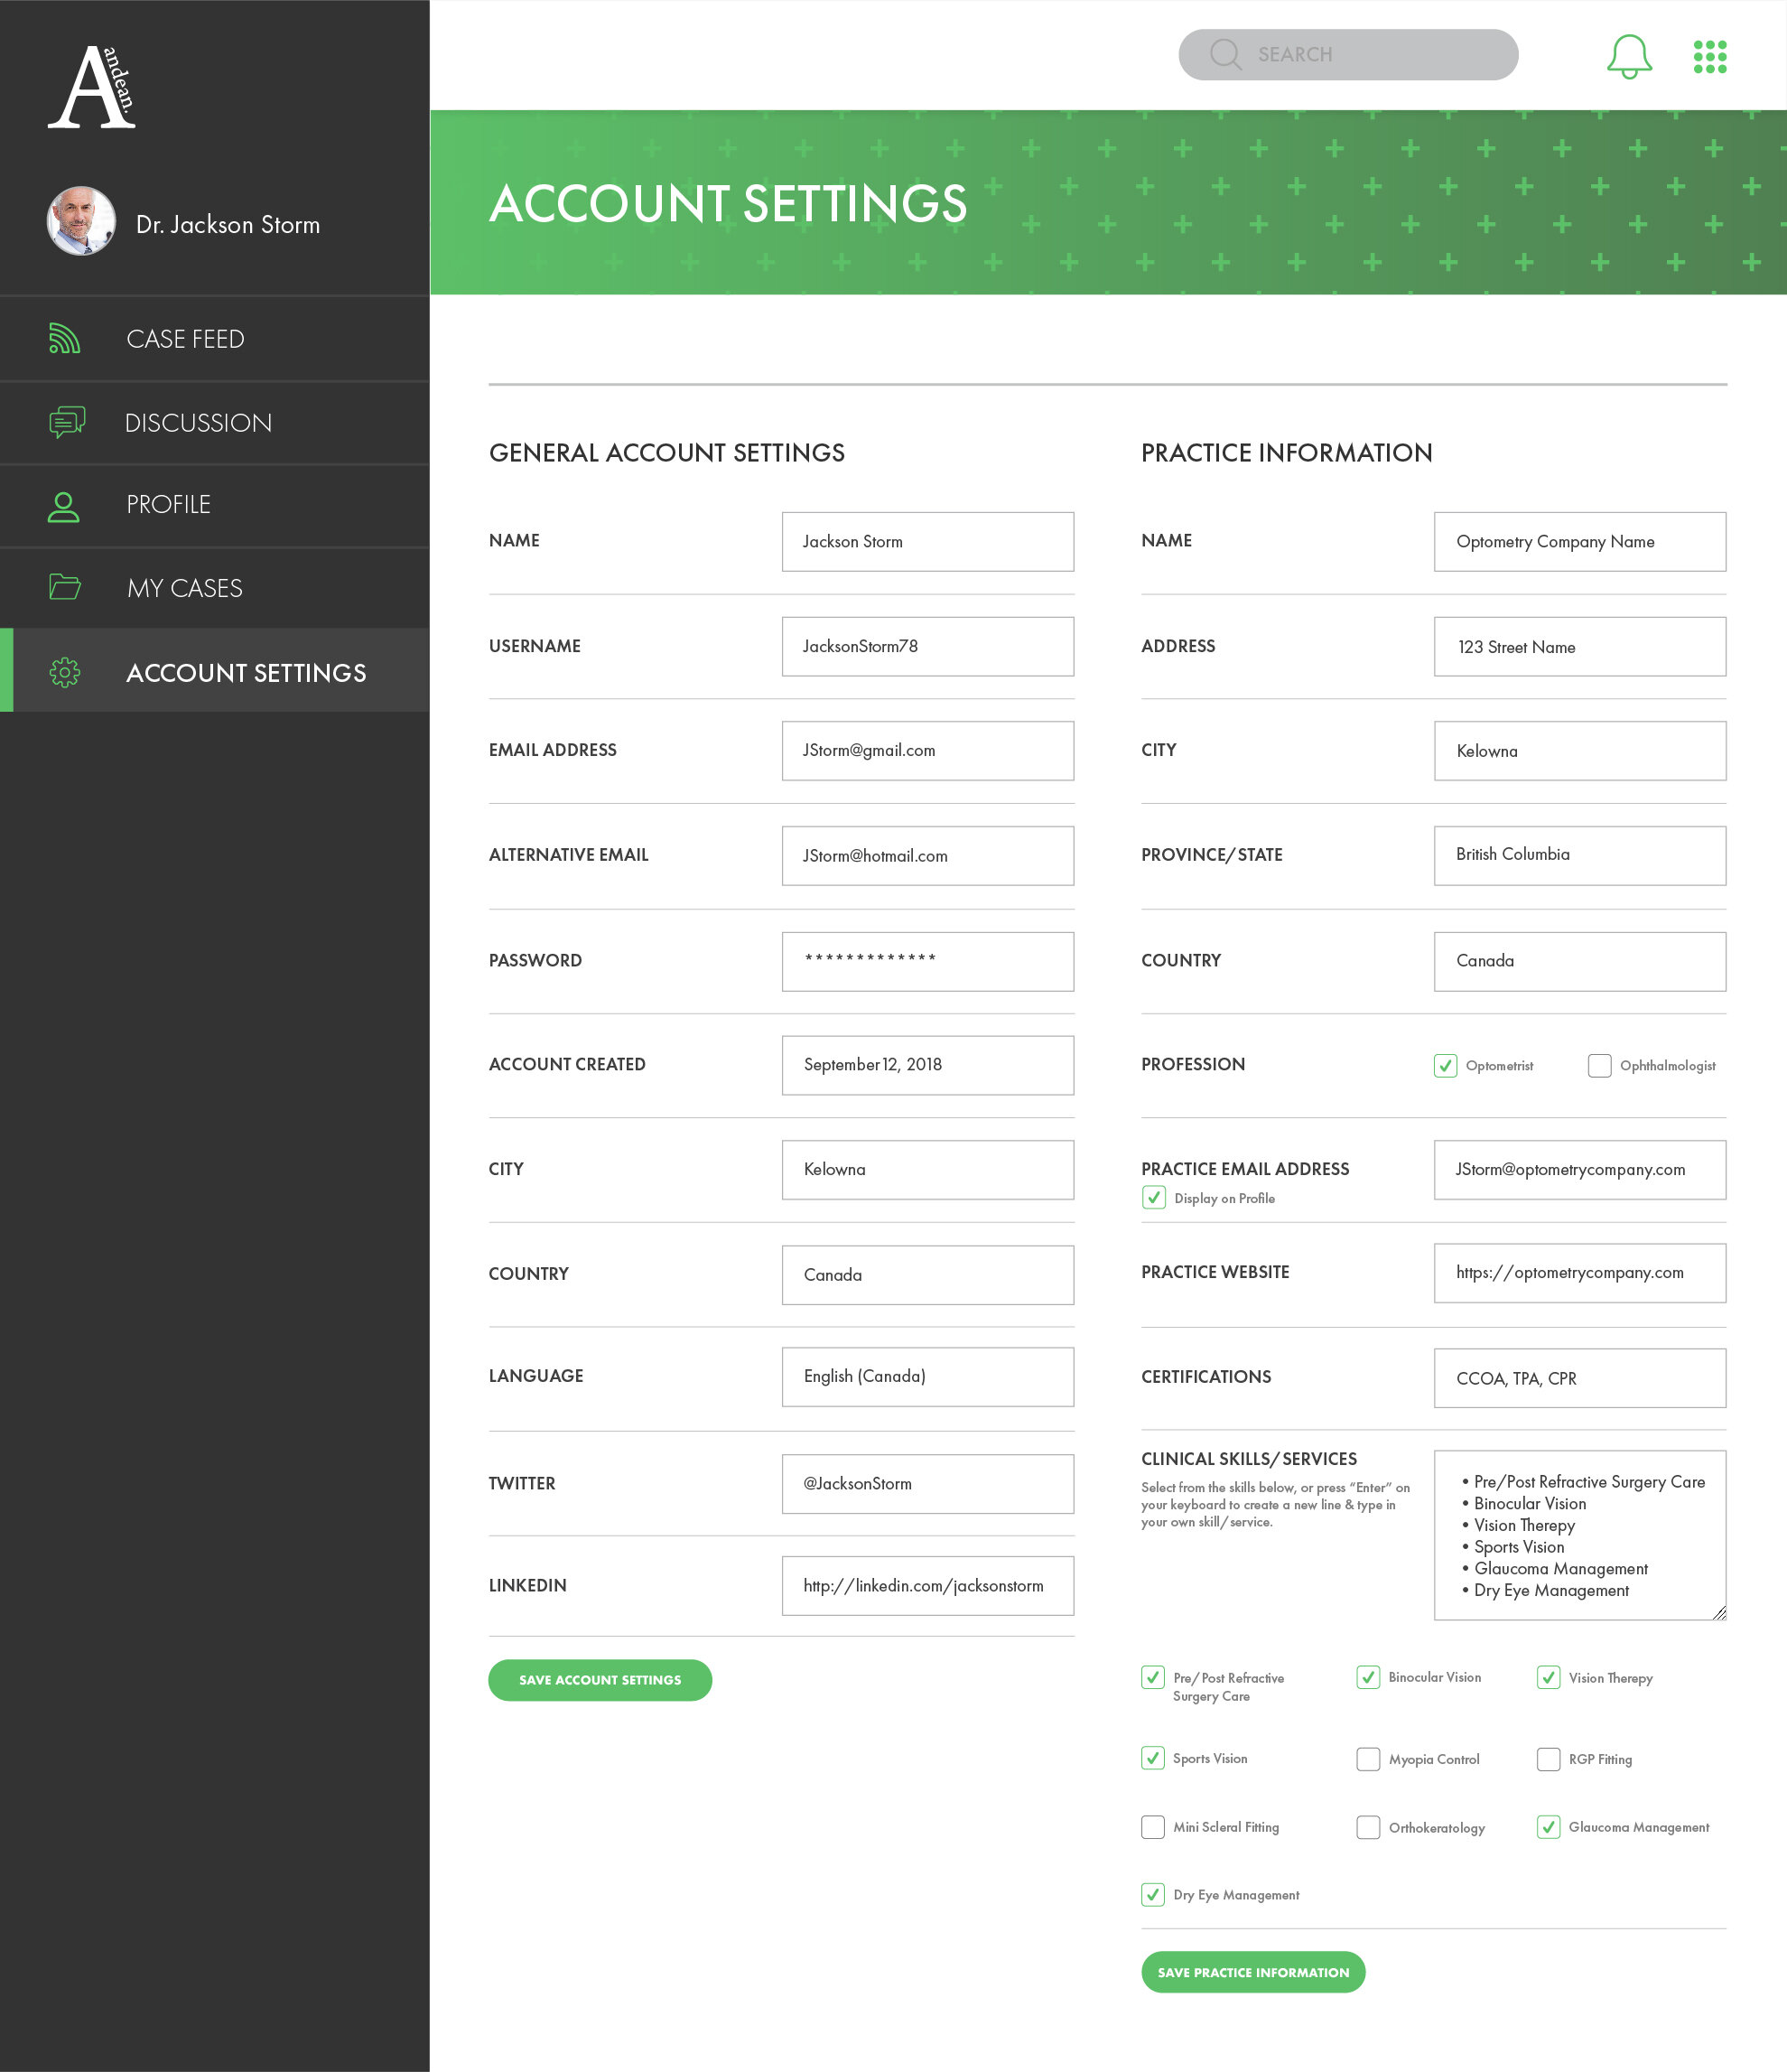 AccountSettings_V5_ACCOUNT SETTINGS - edit screen.jpg